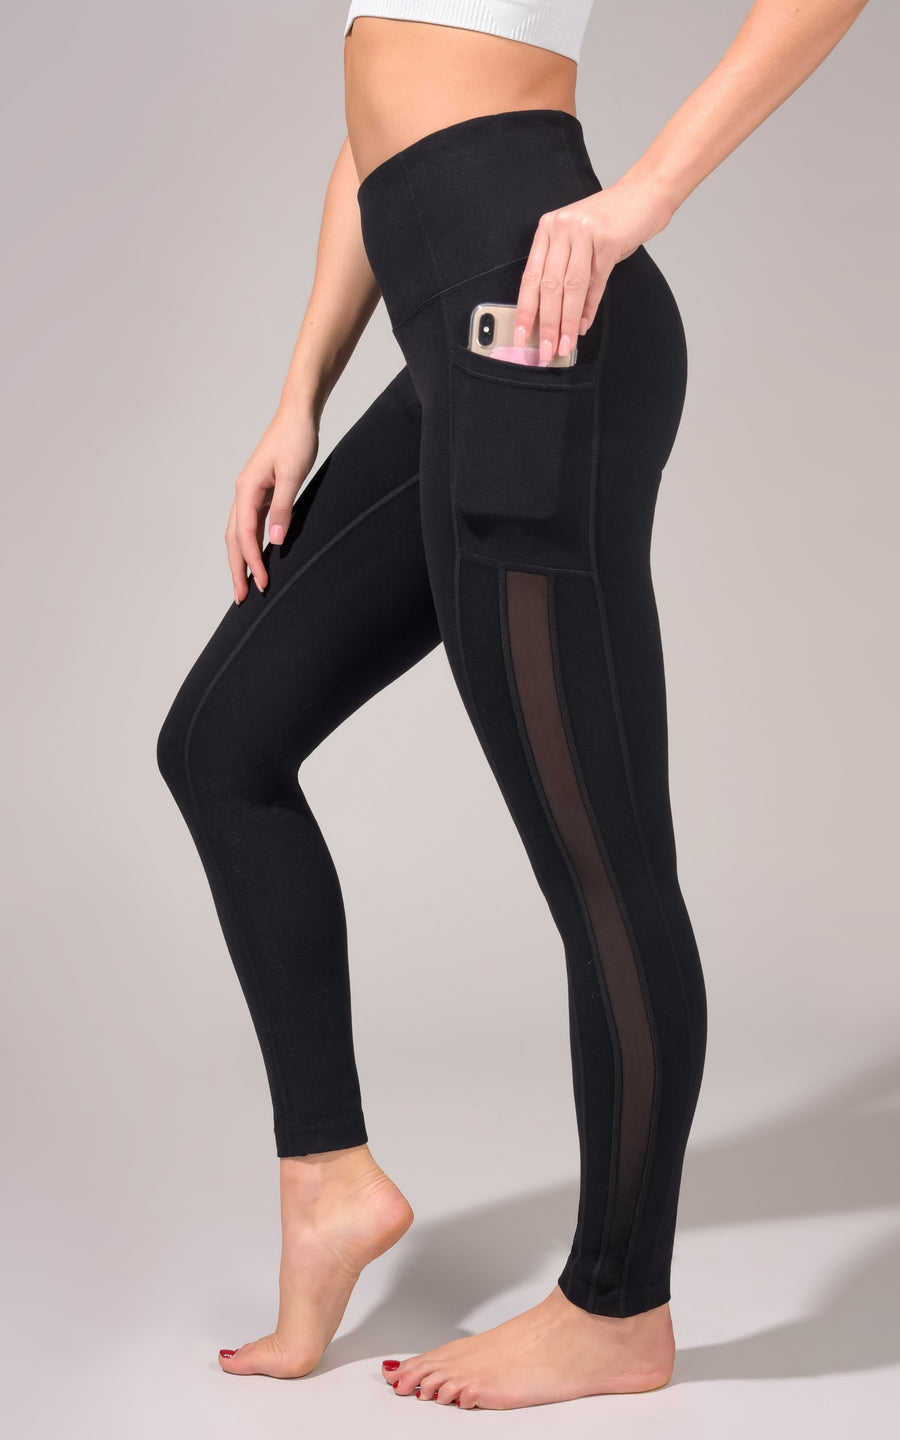 NEW 90Degree by Reflex Power PolarFlex Leggings Yoga Fleece Lined Pants  Workout 